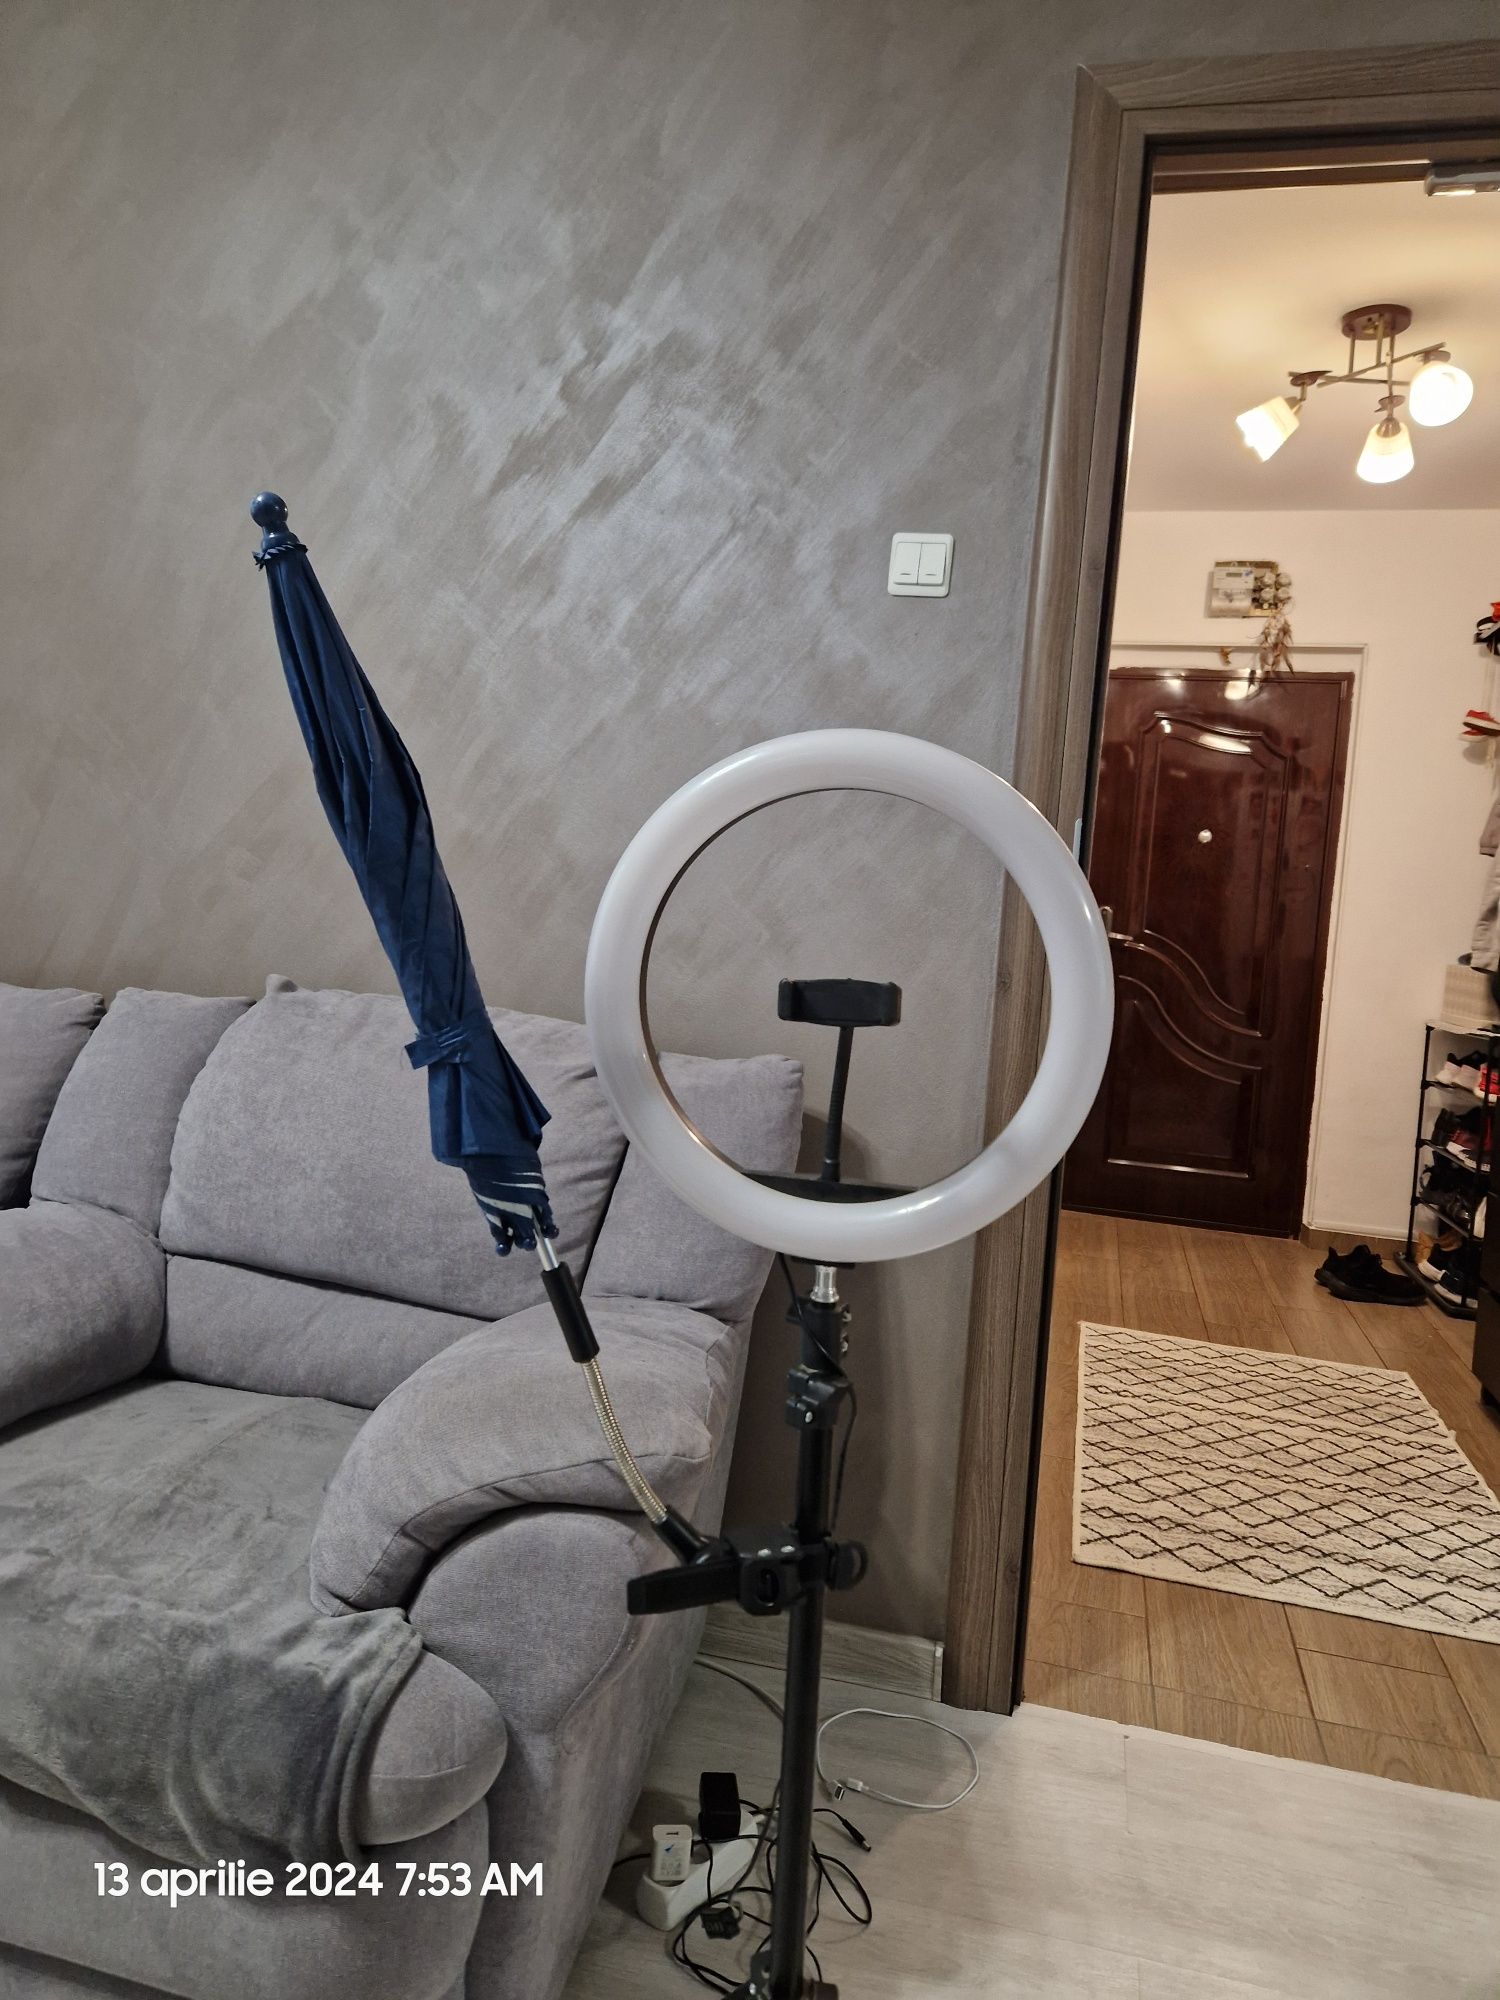 Lampa circulara Ring Light si umbrelă pentru fotografii, LED SMD